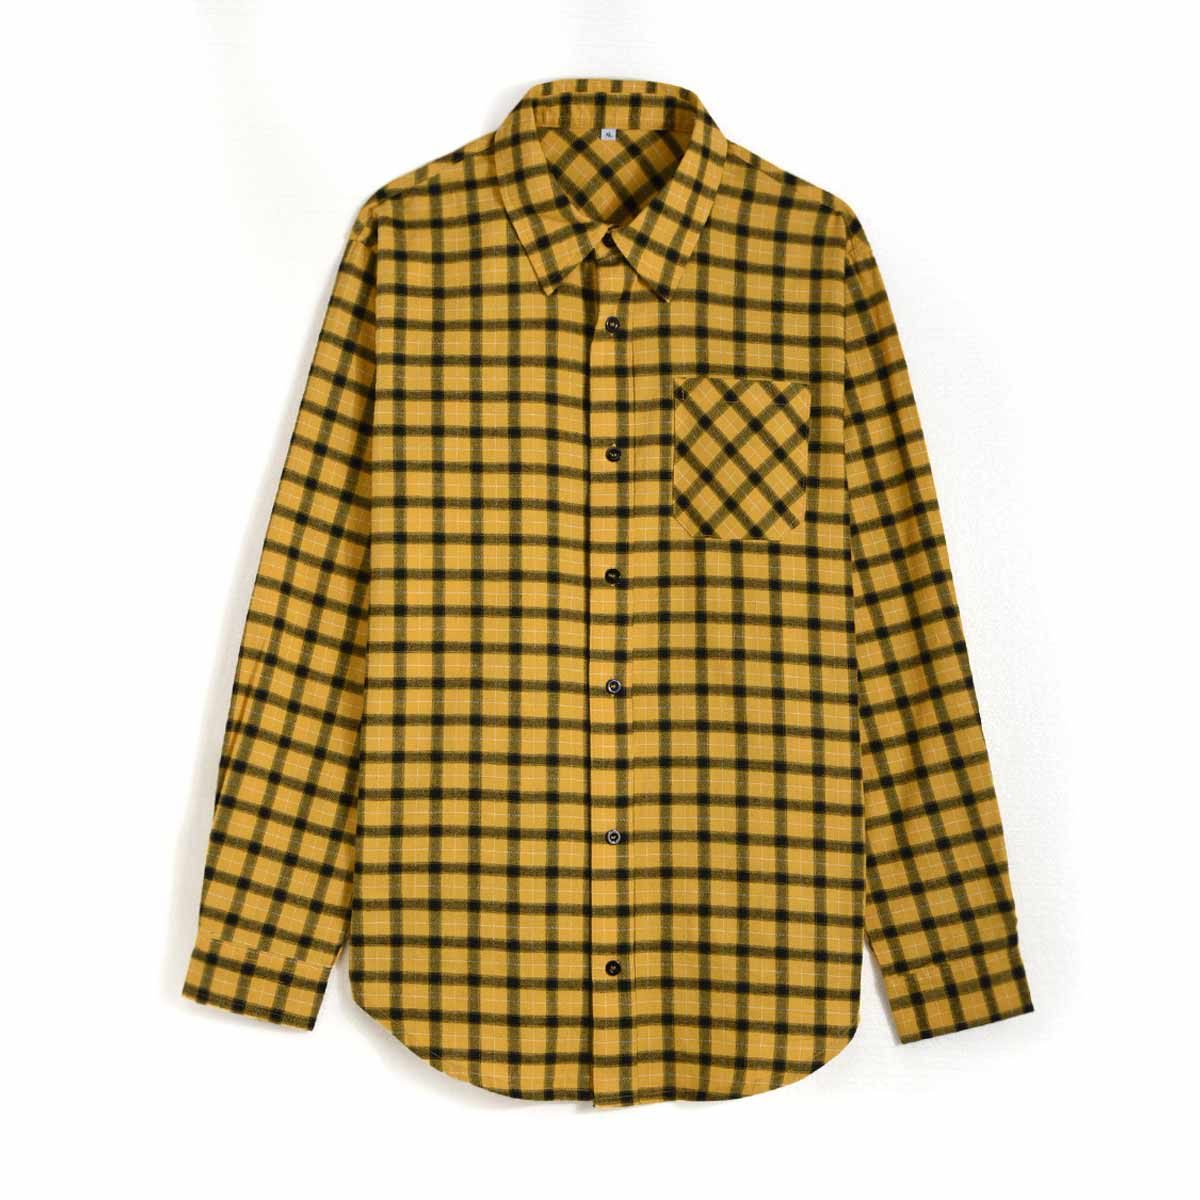 lattice-yellow-mens-yellow-check-shirt-SFA-210331-4